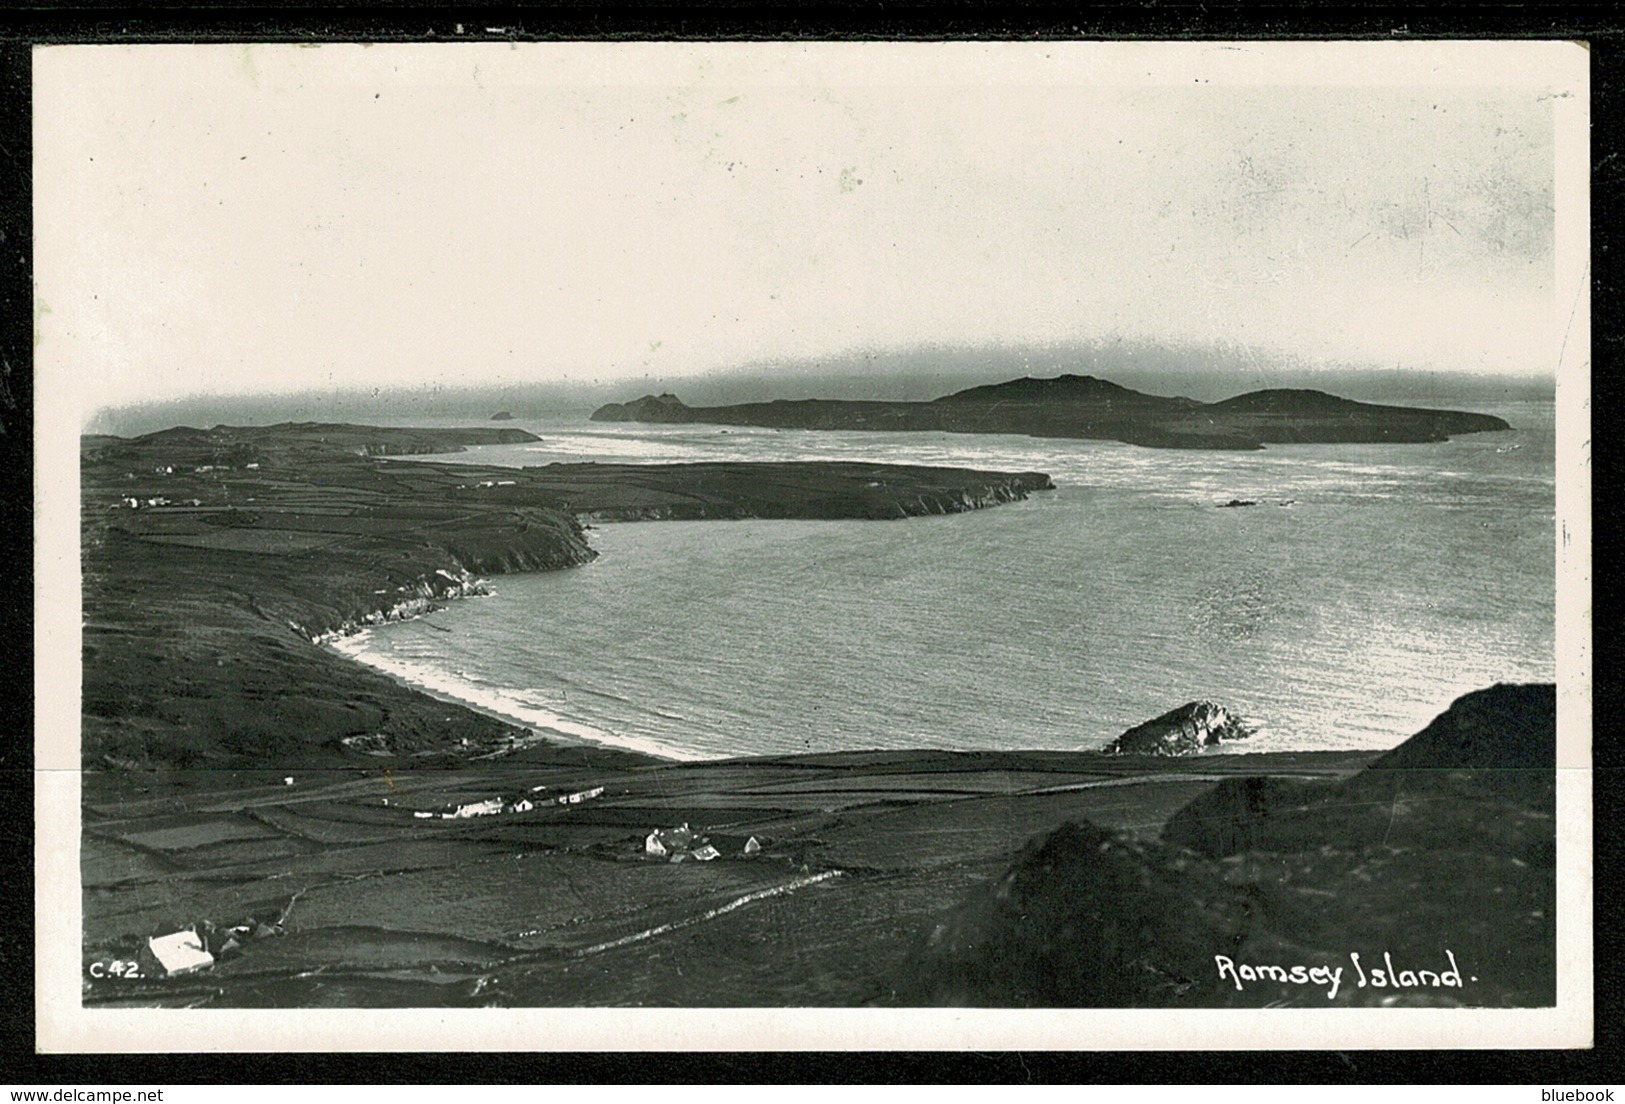 Ref 1320 - 1961 Real Photo Postcard - Ramsey Island Pembrokeshire Wales - Pembrokeshire